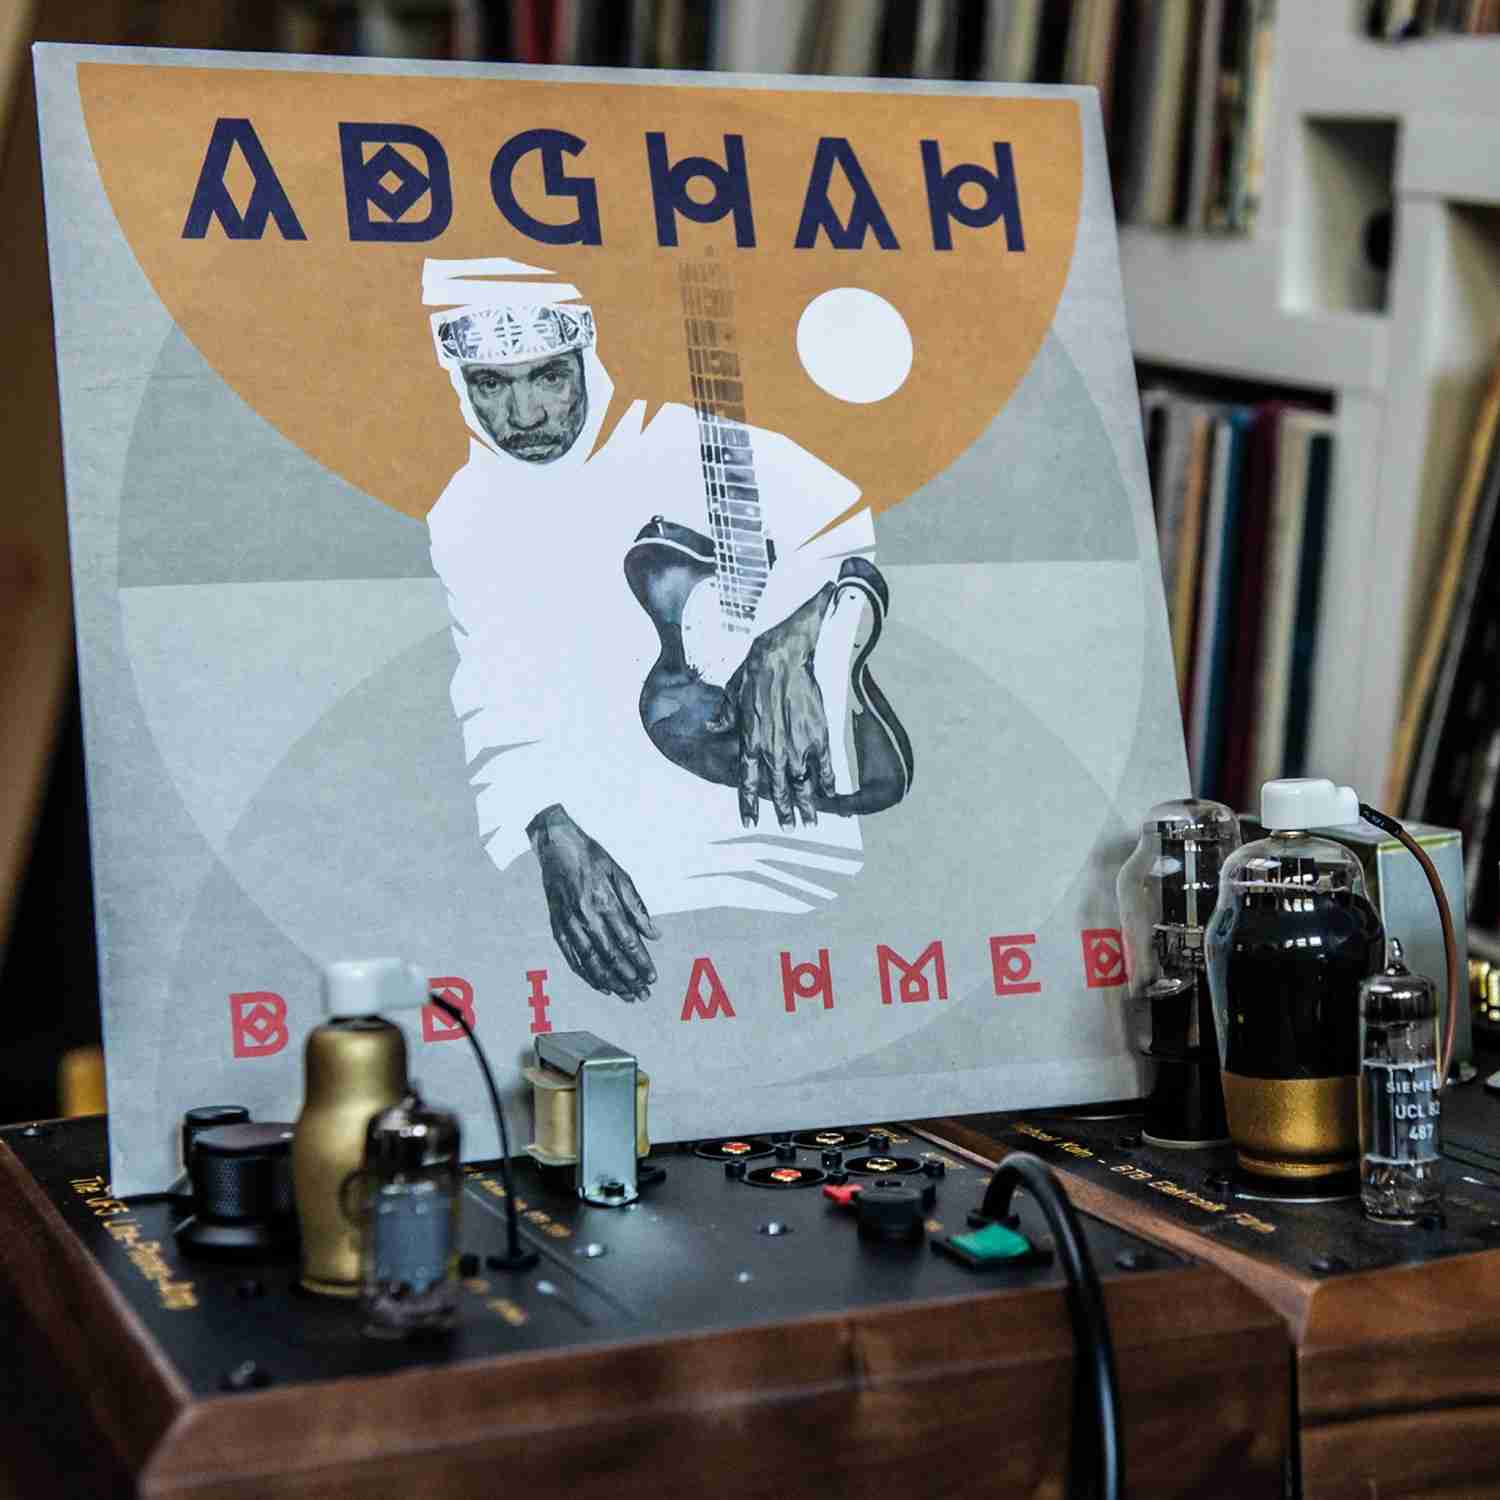 Schallplatte Bibi Ahmed – A Cocas / I Midi Wall und Bibi Ahmed – Adghah (Sounds Of Subterrania) im Test, Bild 2